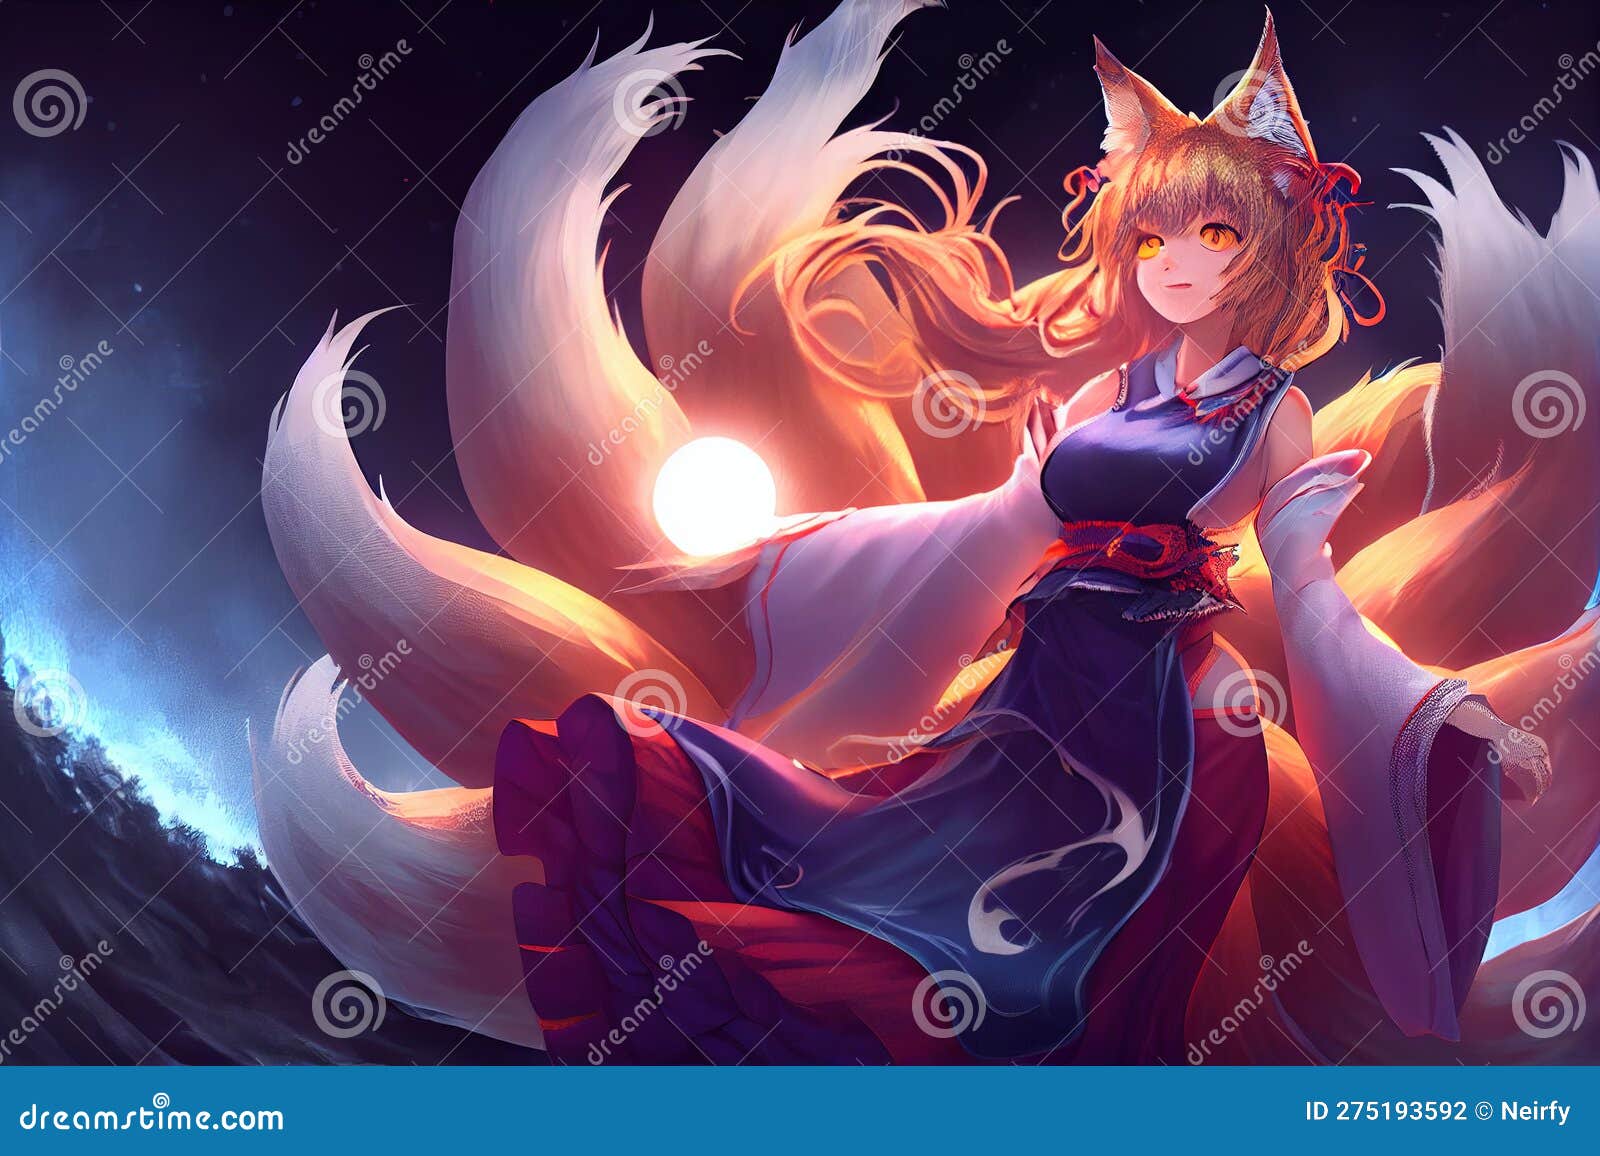 390 Kitsune ideas | kitsune, anime art, anime-demhanvico.com.vn